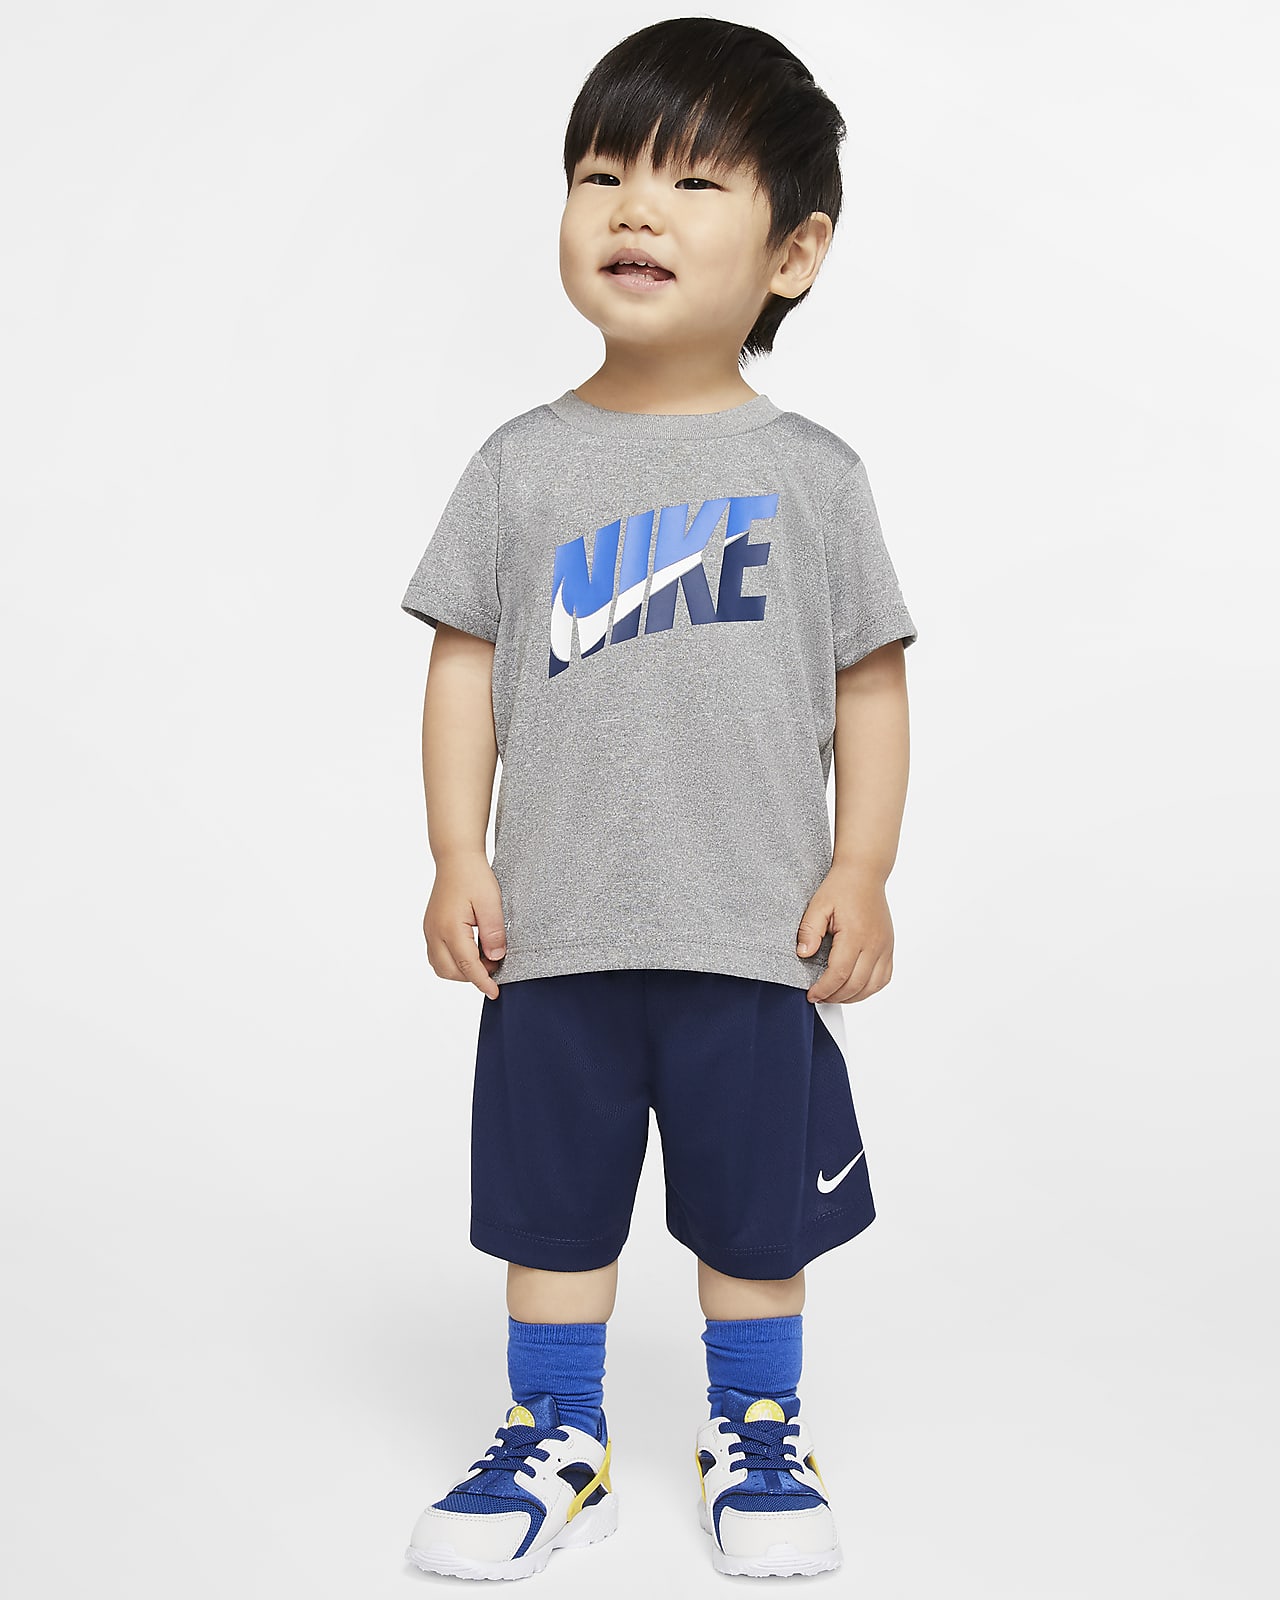 Nike Dri-FIT Shorts and Baby Set. (12-24M) T-Shirt